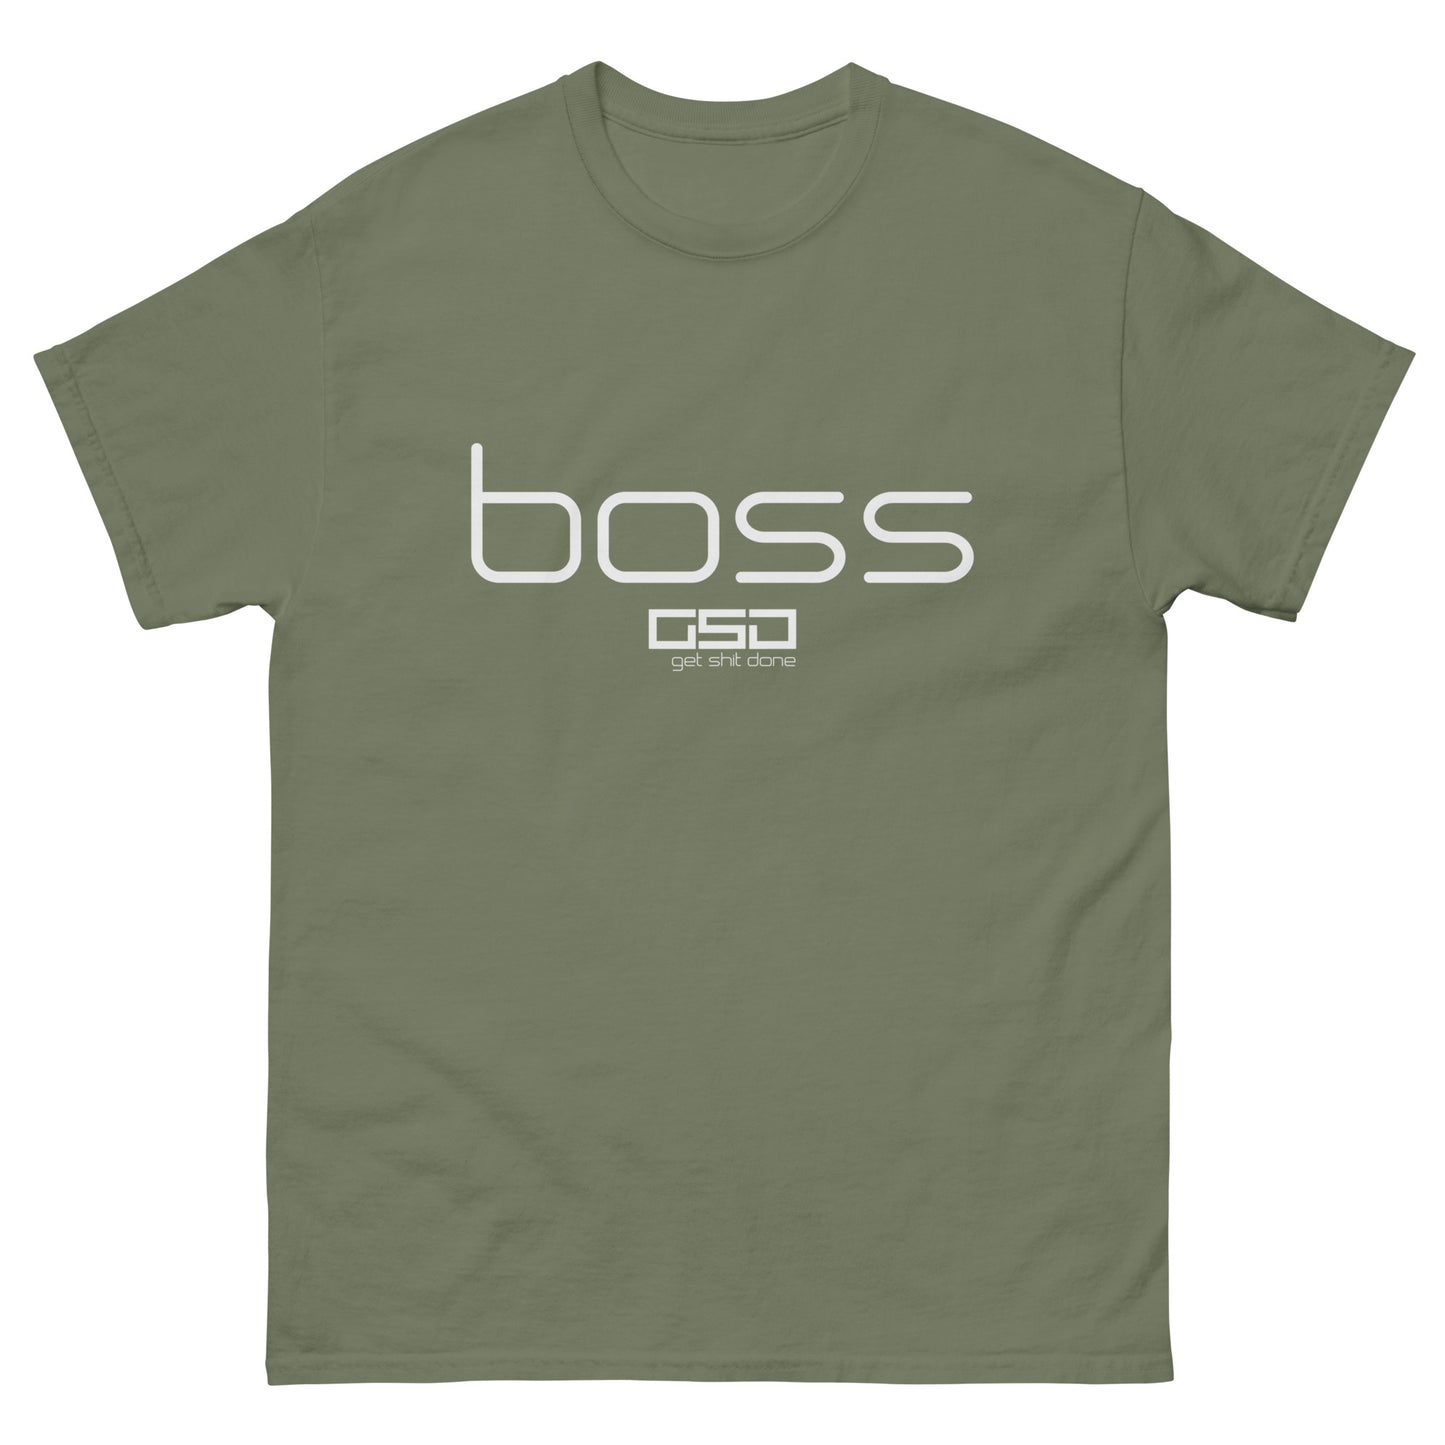 Boss-Classic tee